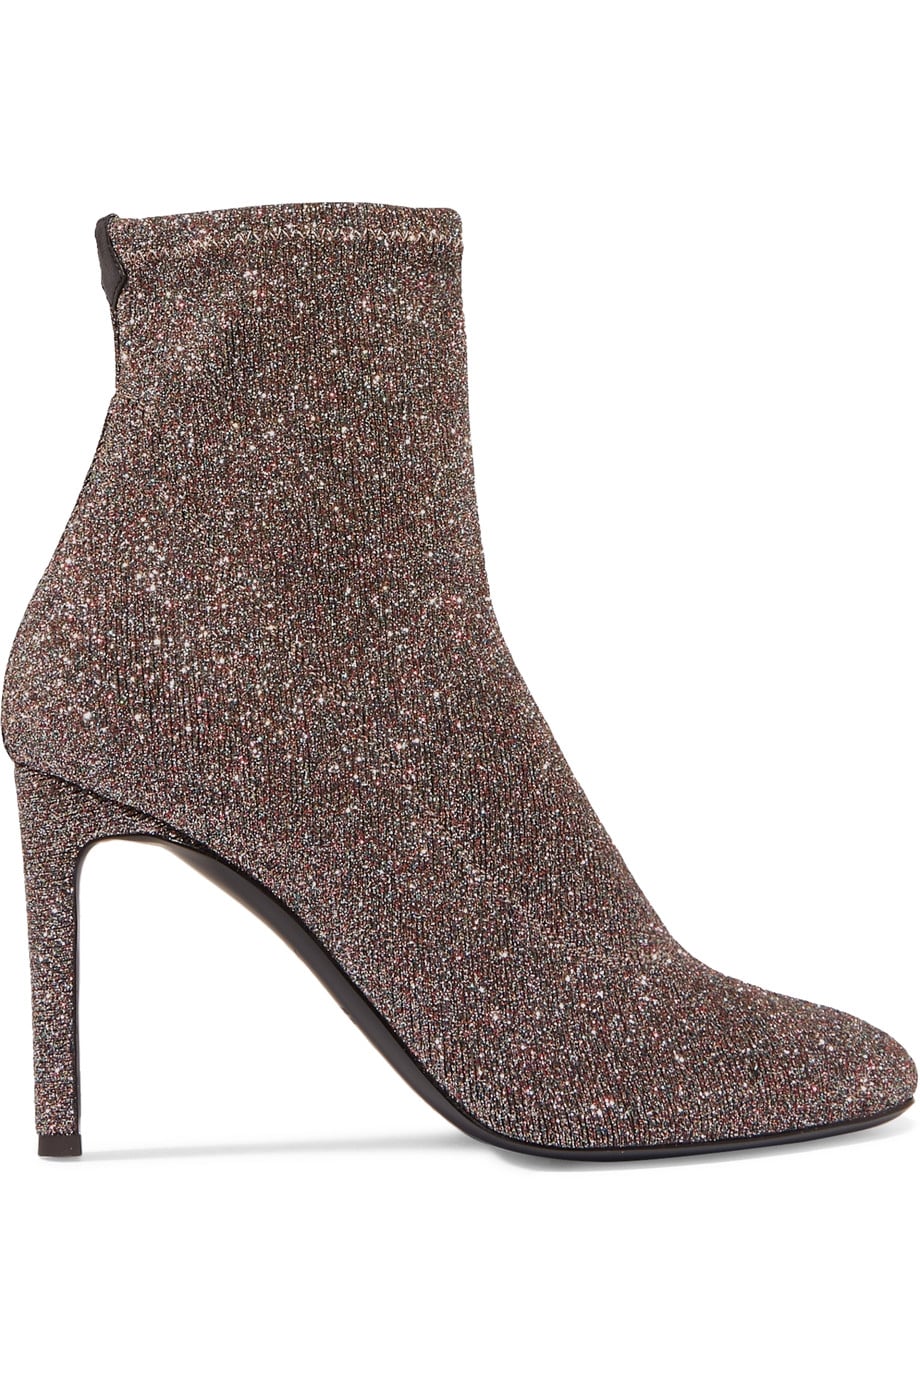 Konsekvent sokker bjerg Giuseppe Zanotti Glittered Sock Boots | 15 Instagram-Worthy Glitter Boots  That Everyone Will Envy This Fall | POPSUGAR Fashion Photo 7